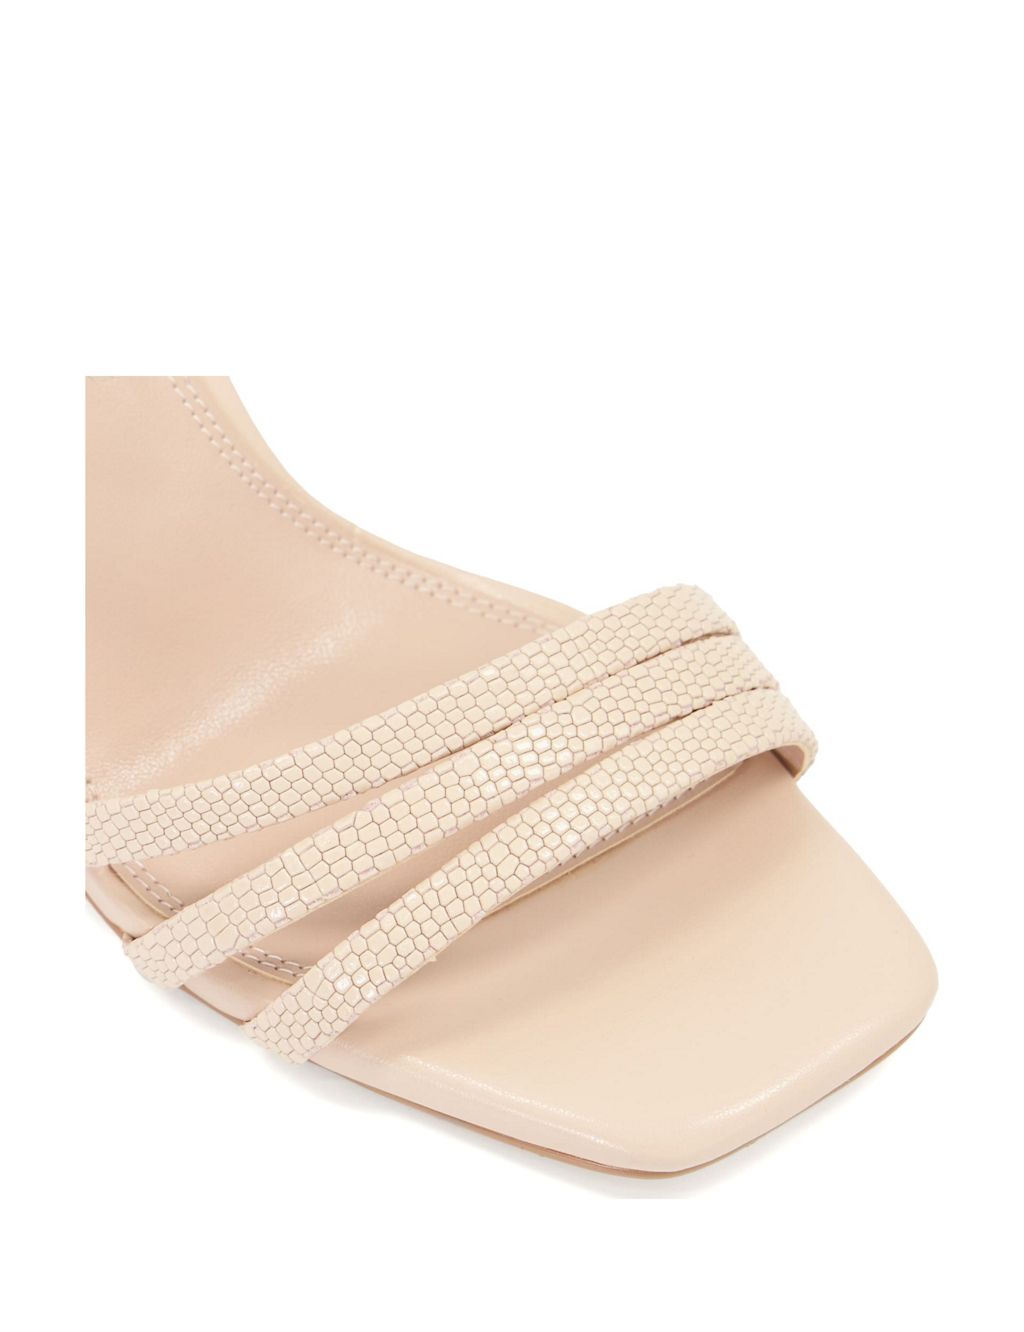 Leather Ankle Strap Stiletto Heel Sandals | Dune London | M&S